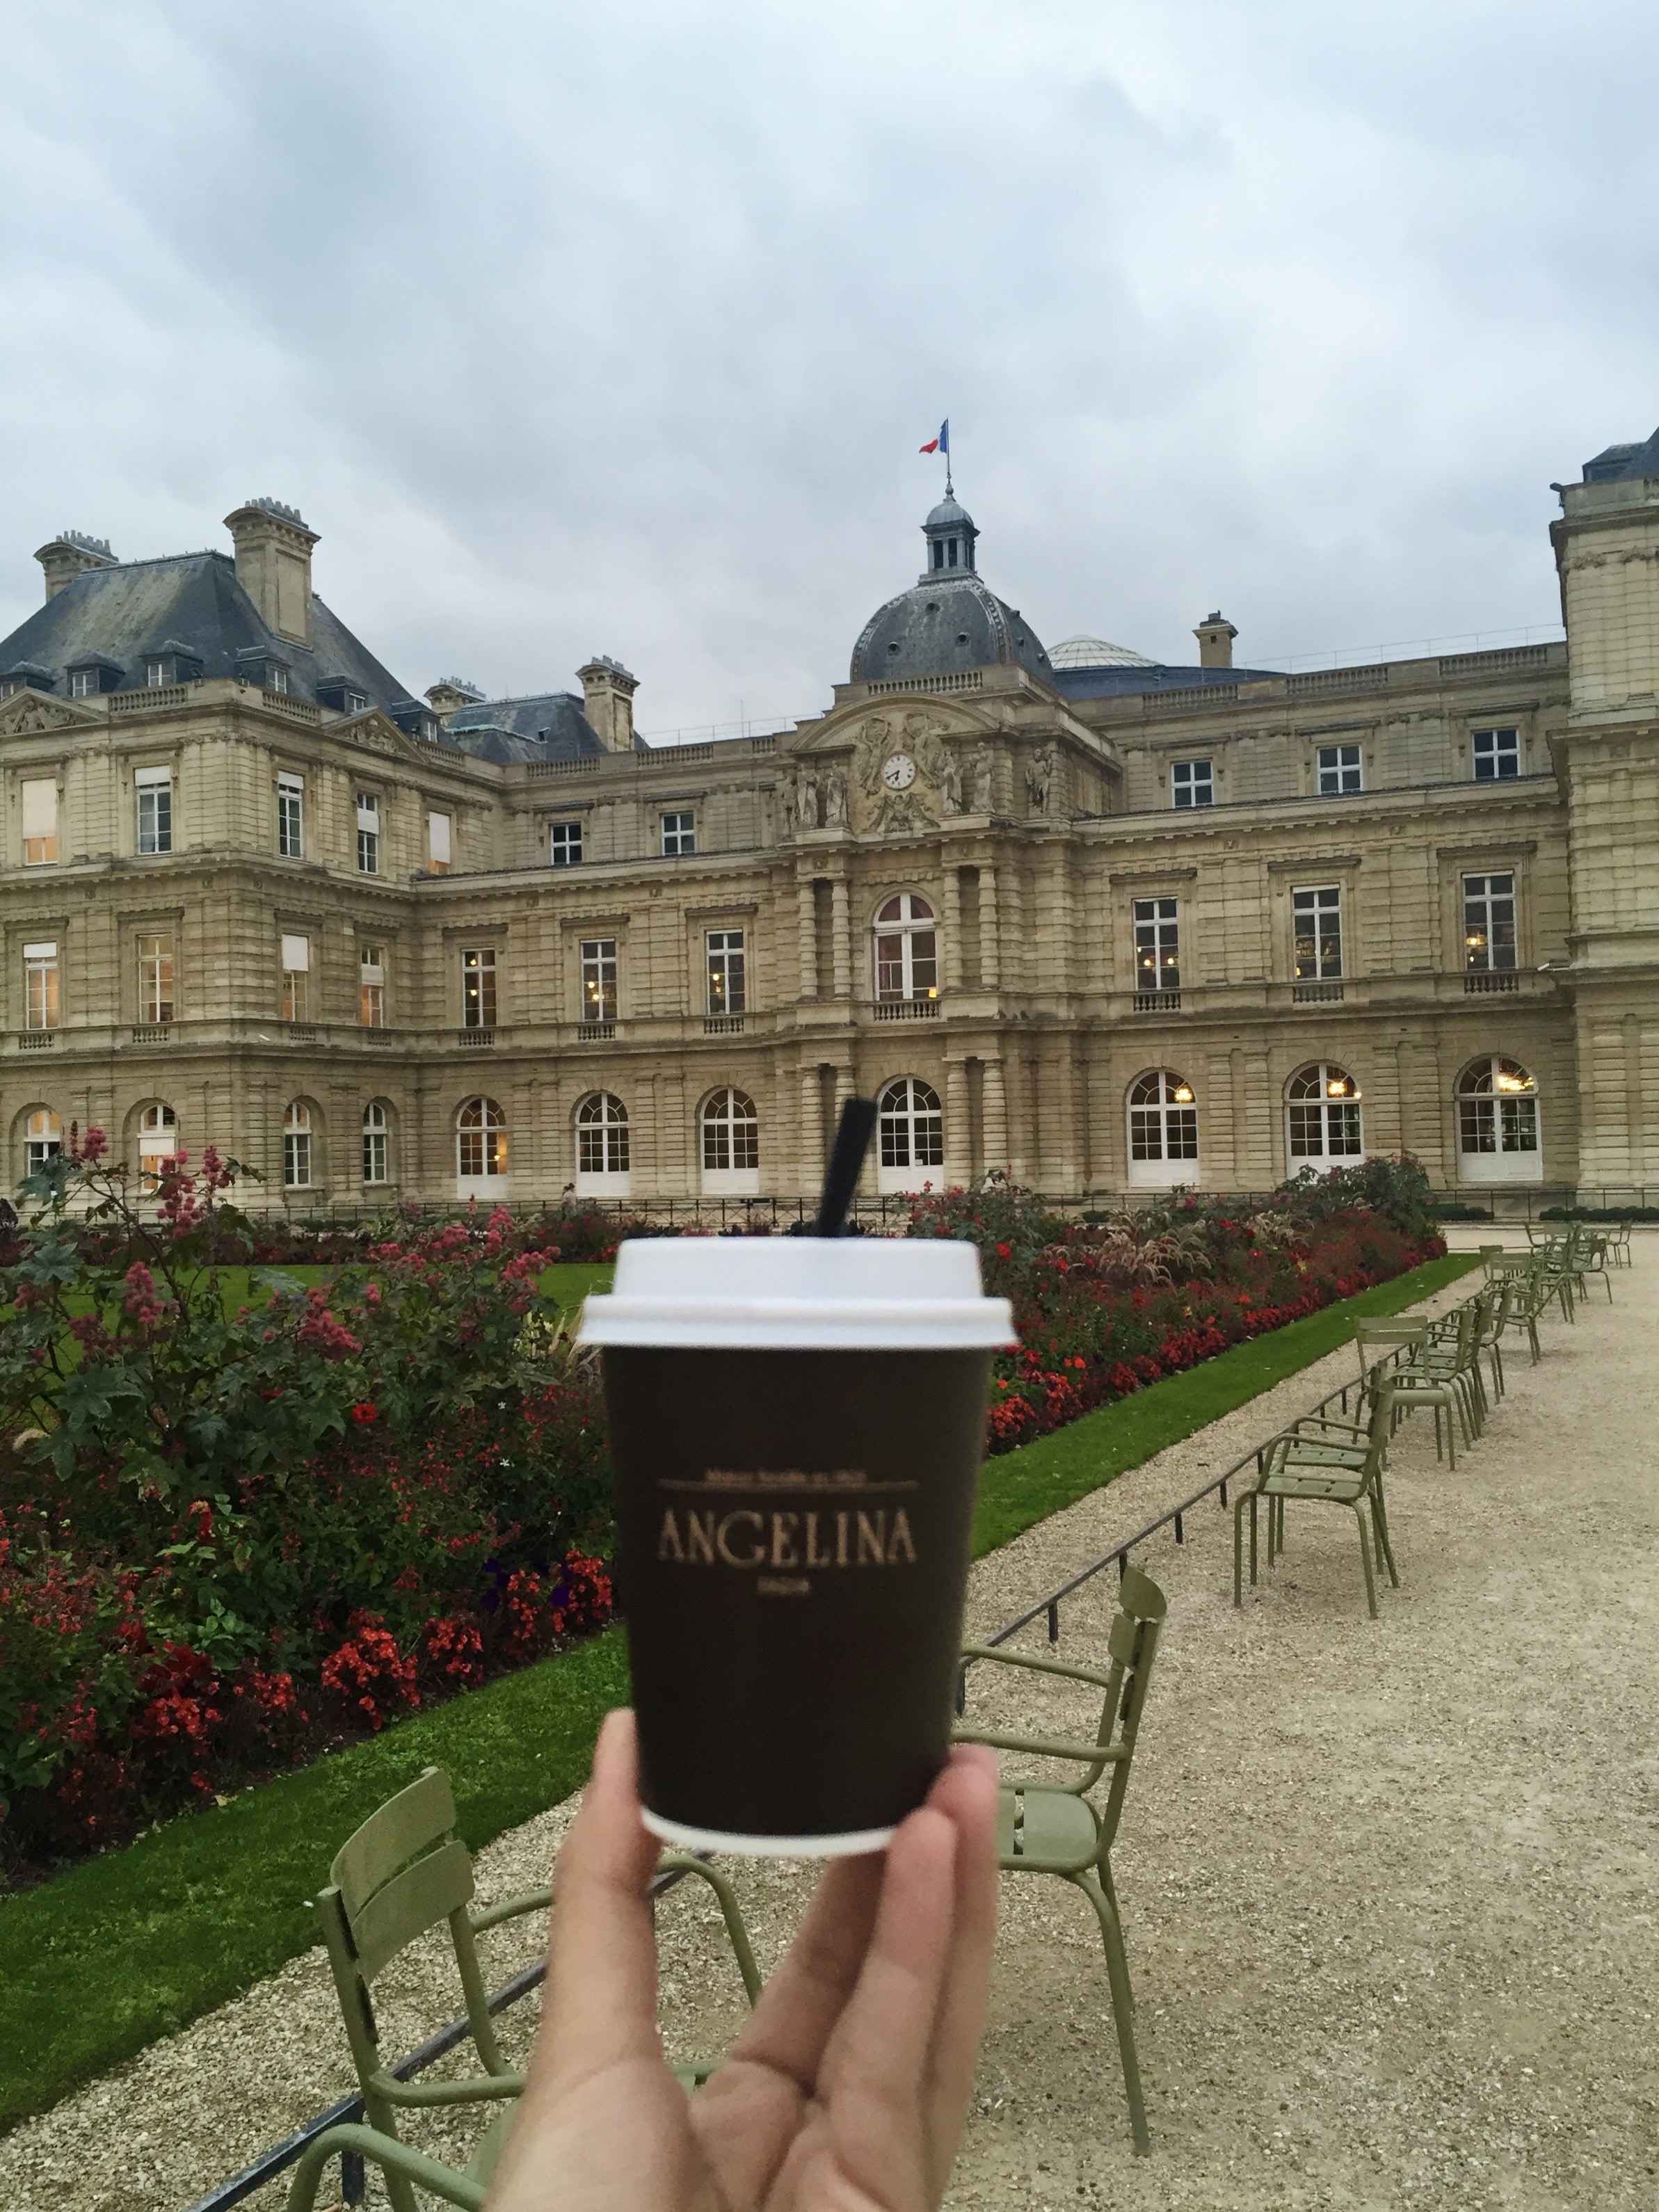 Angelina hot chocolate: Winter in Paris